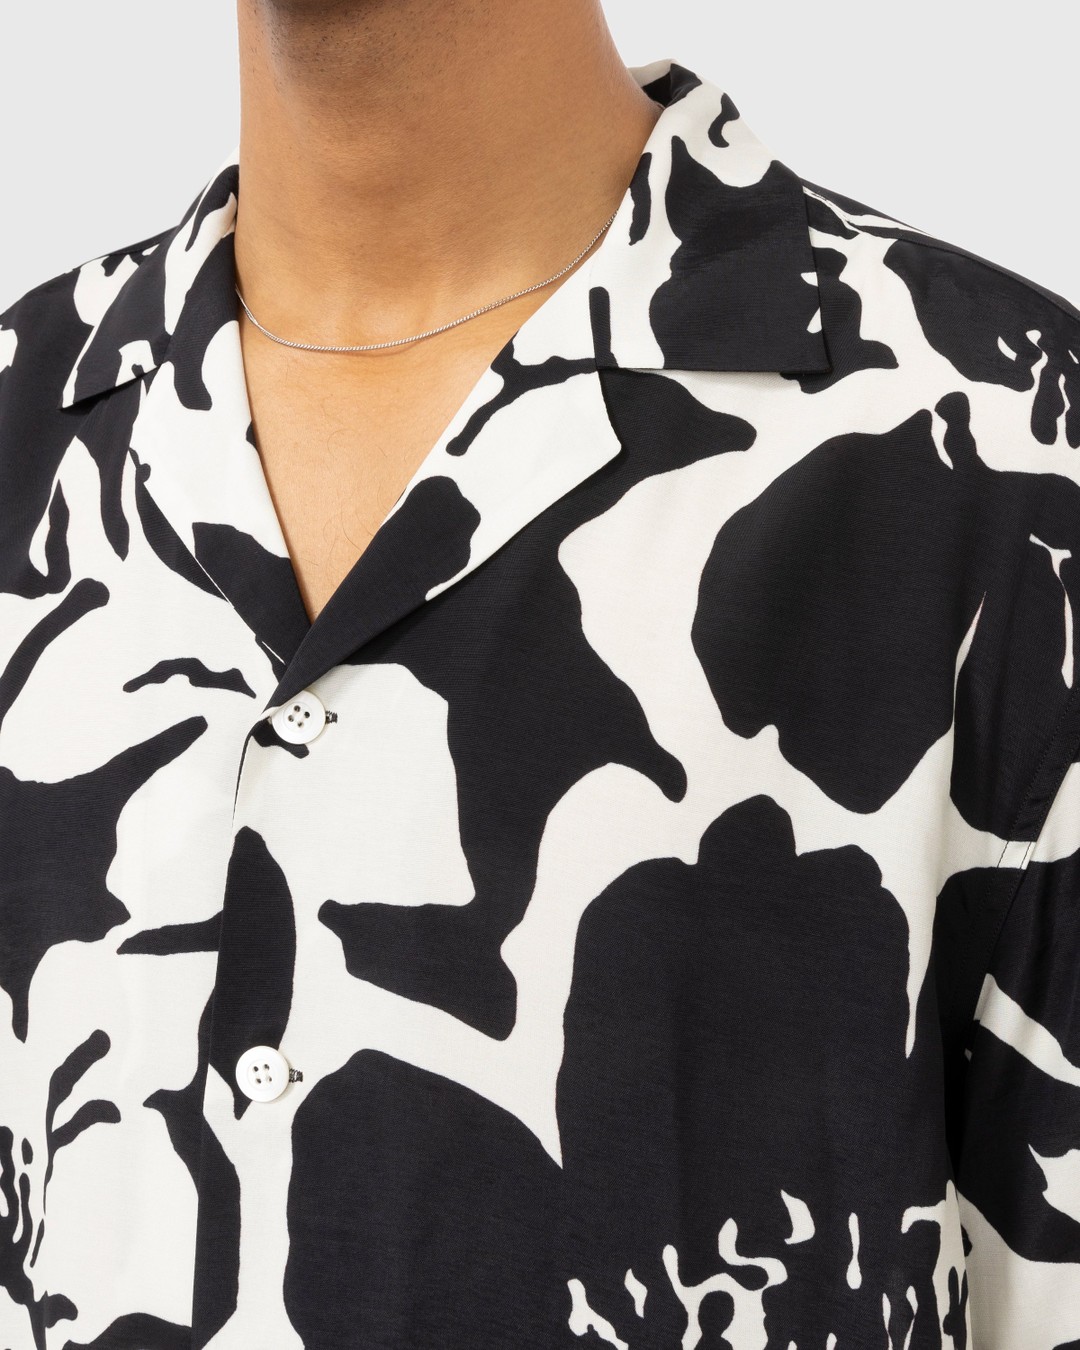 Dries van Noten – Floral Cassi Shirt Multi - Shirts - Multi - Image 5